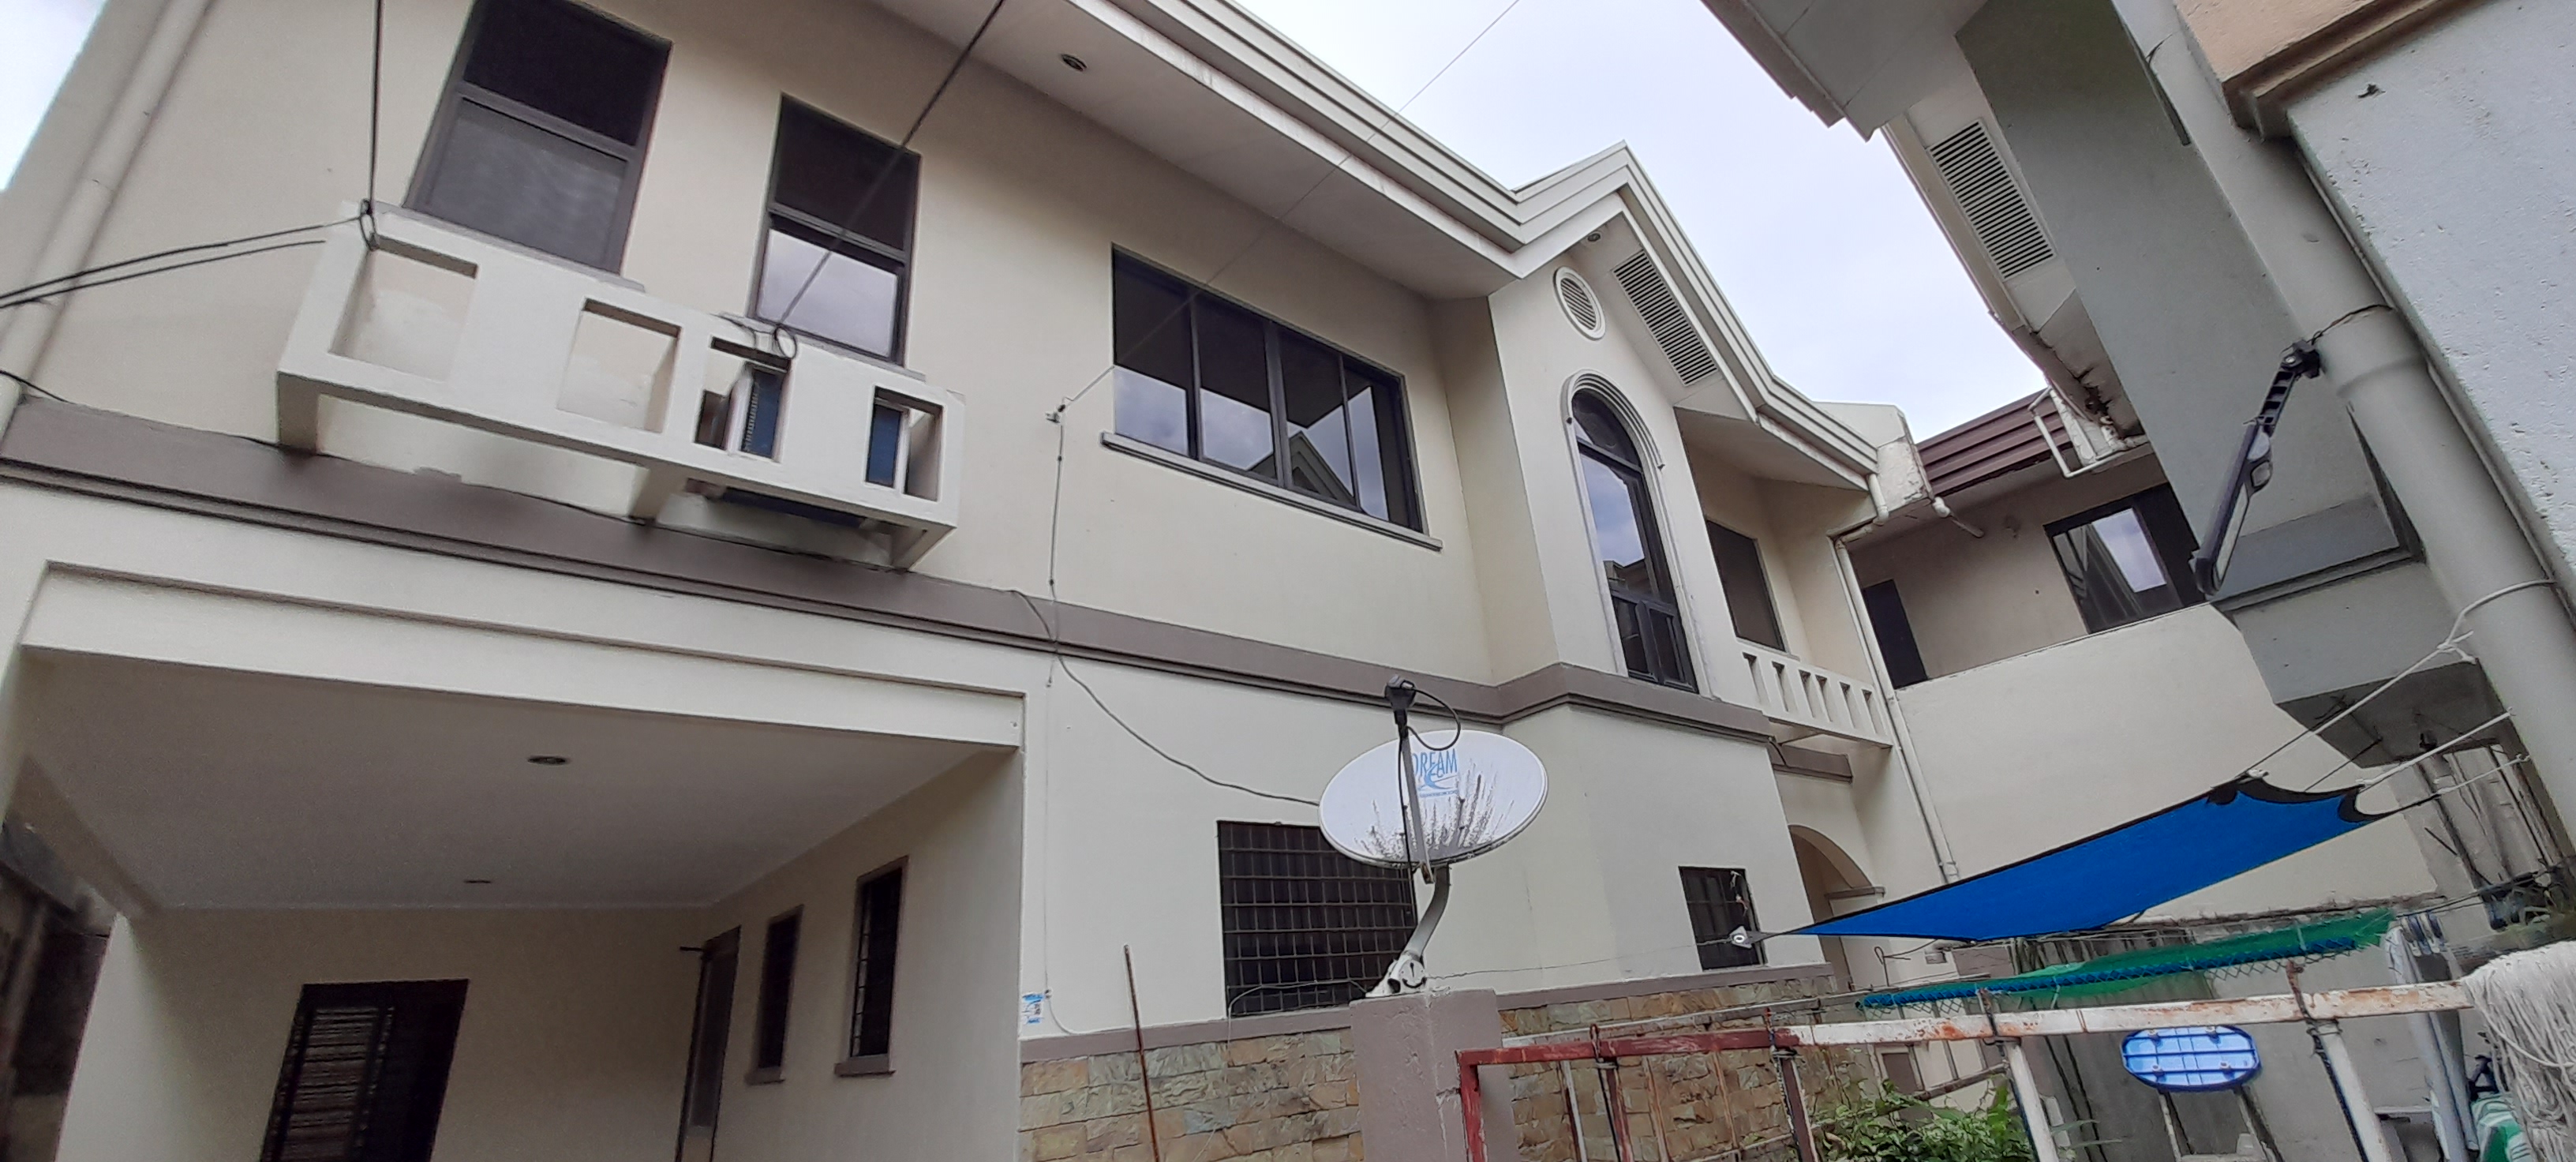 3-Bedroom House located in Banawa, Cebu City - Semi Furnished